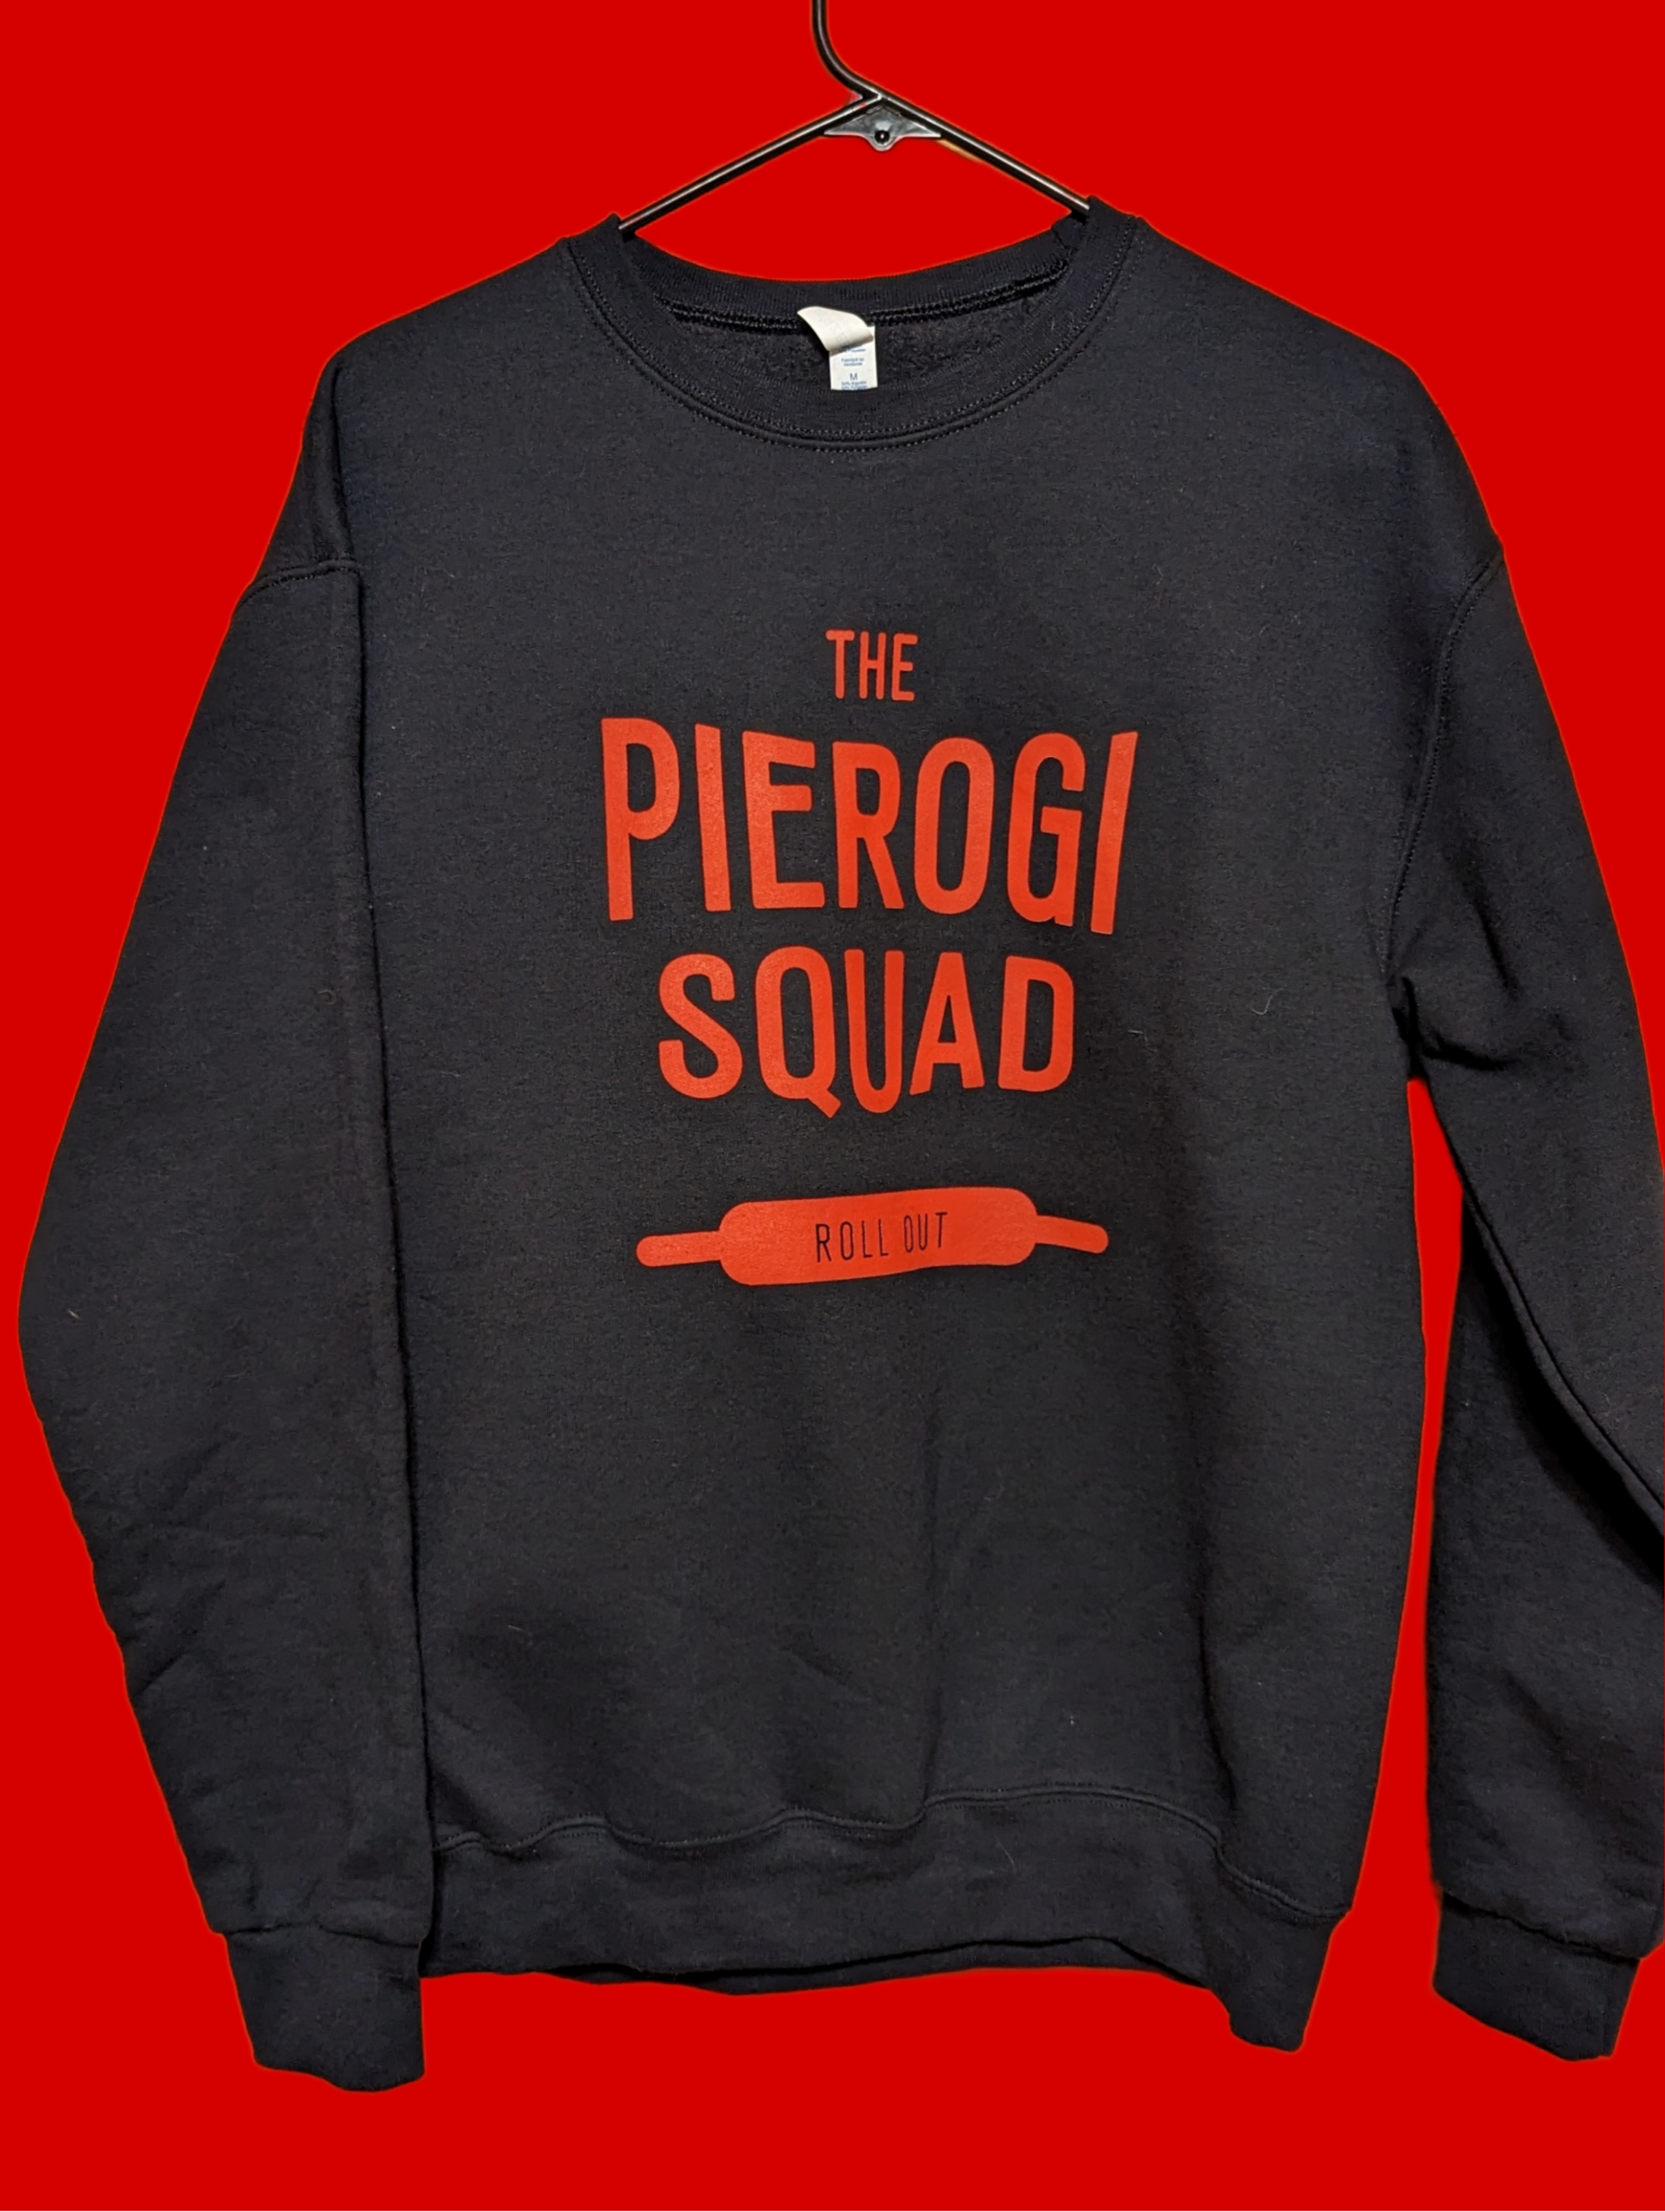 Pierogi Squad crewneck sweatshirt